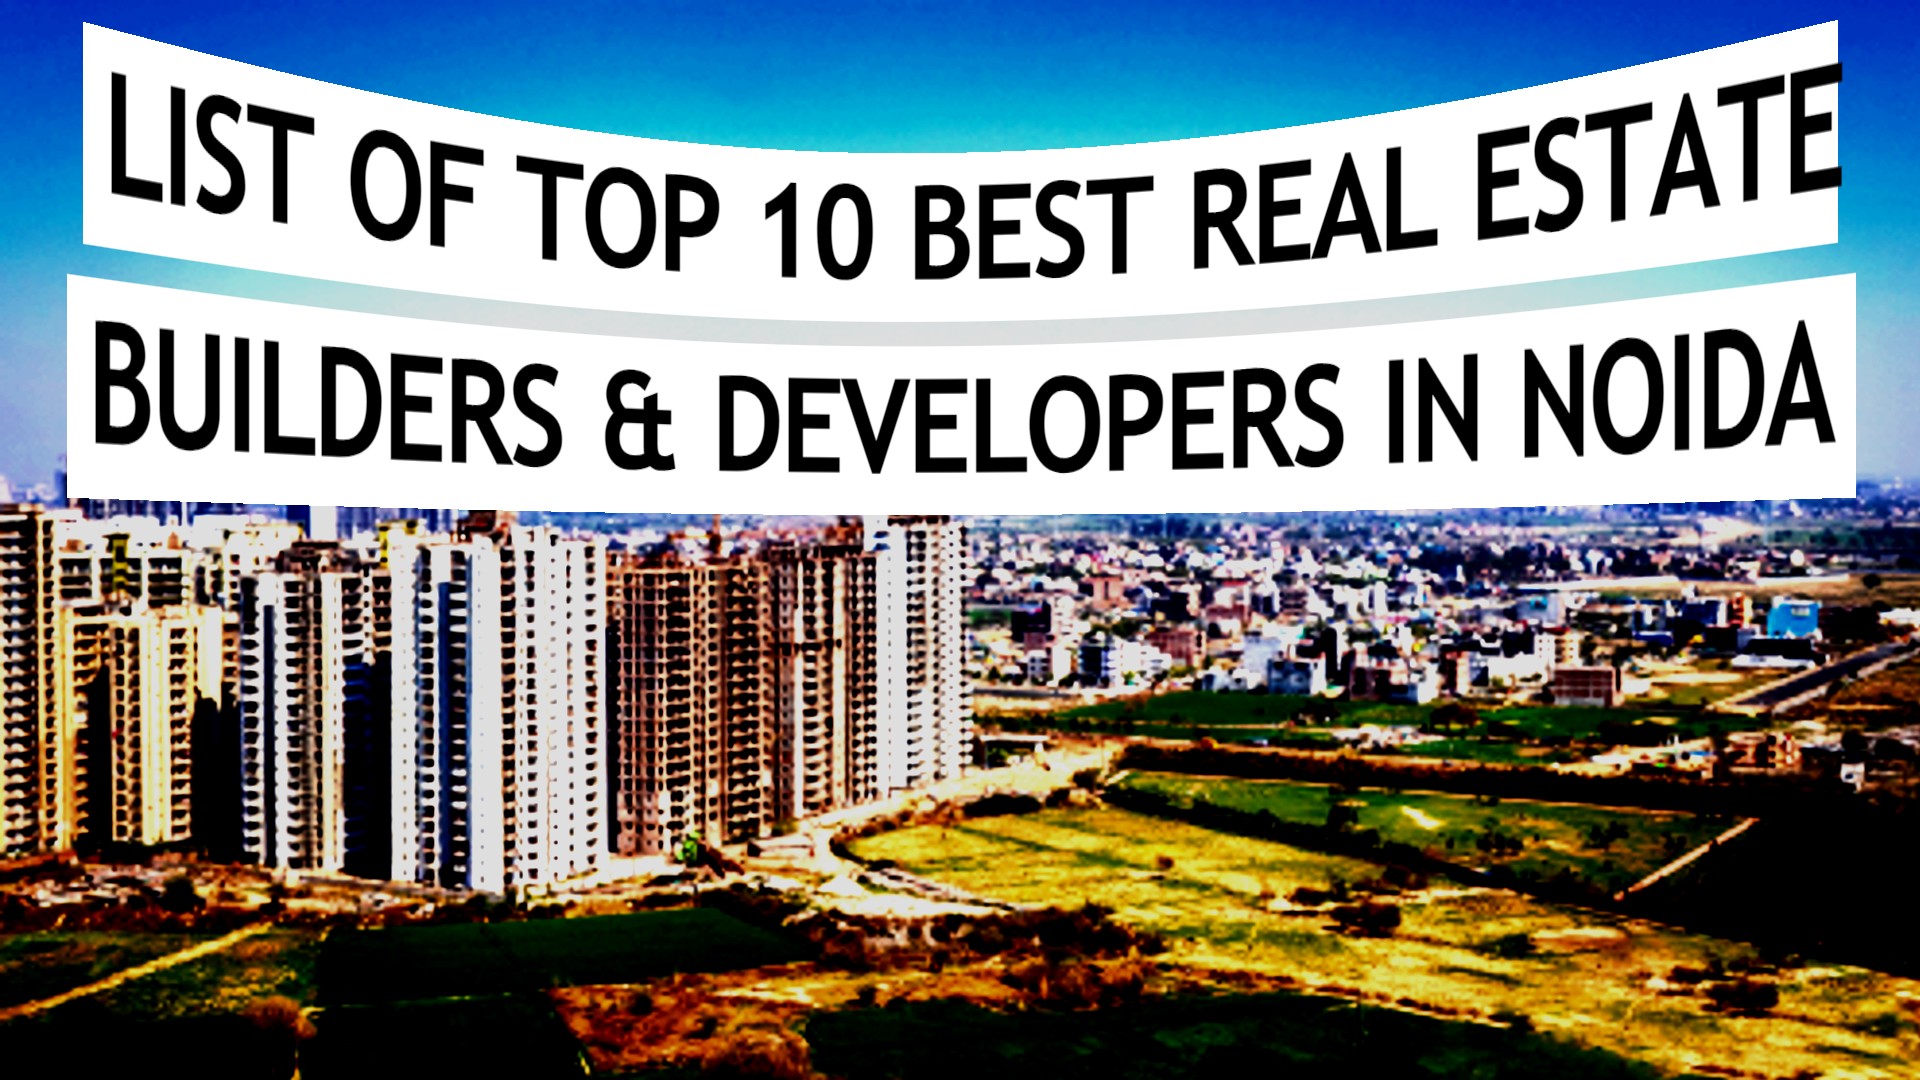 Top 10 Best Real Estate Builders & Developers in Noida